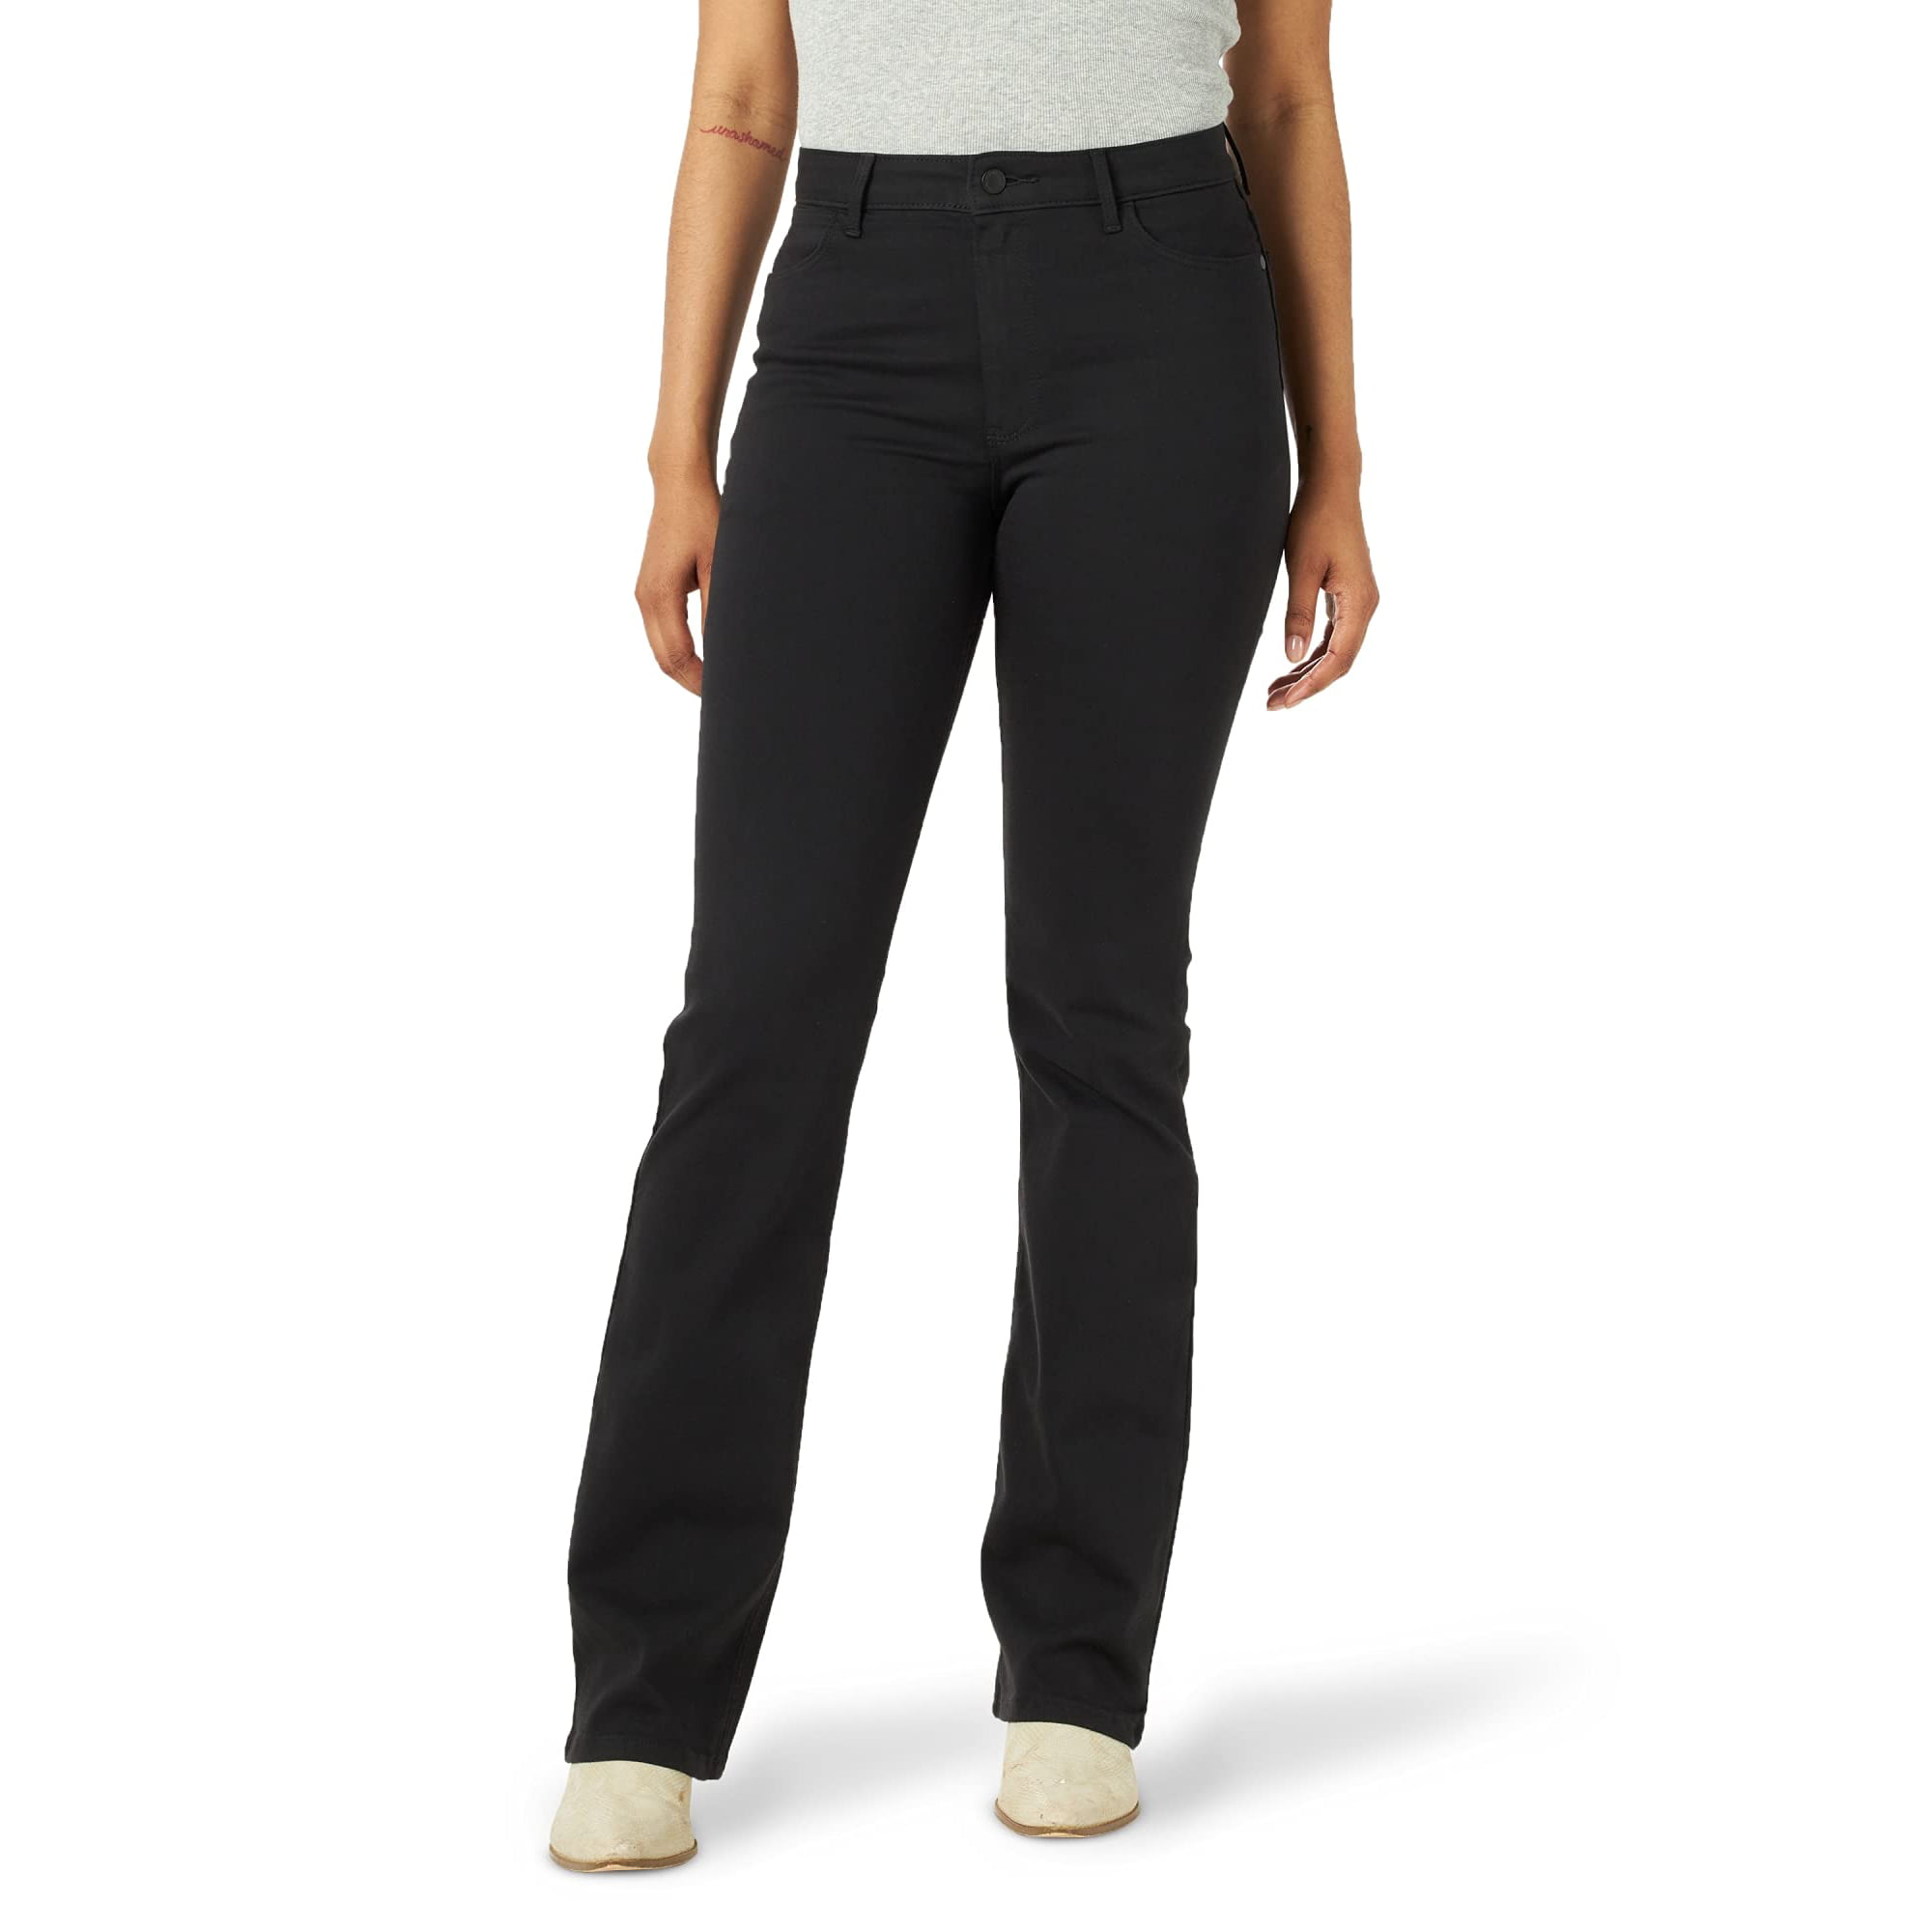 Wrangler Women's High Rise Bold Boot Jean, Black, 8W x 32L | Walmart Canada